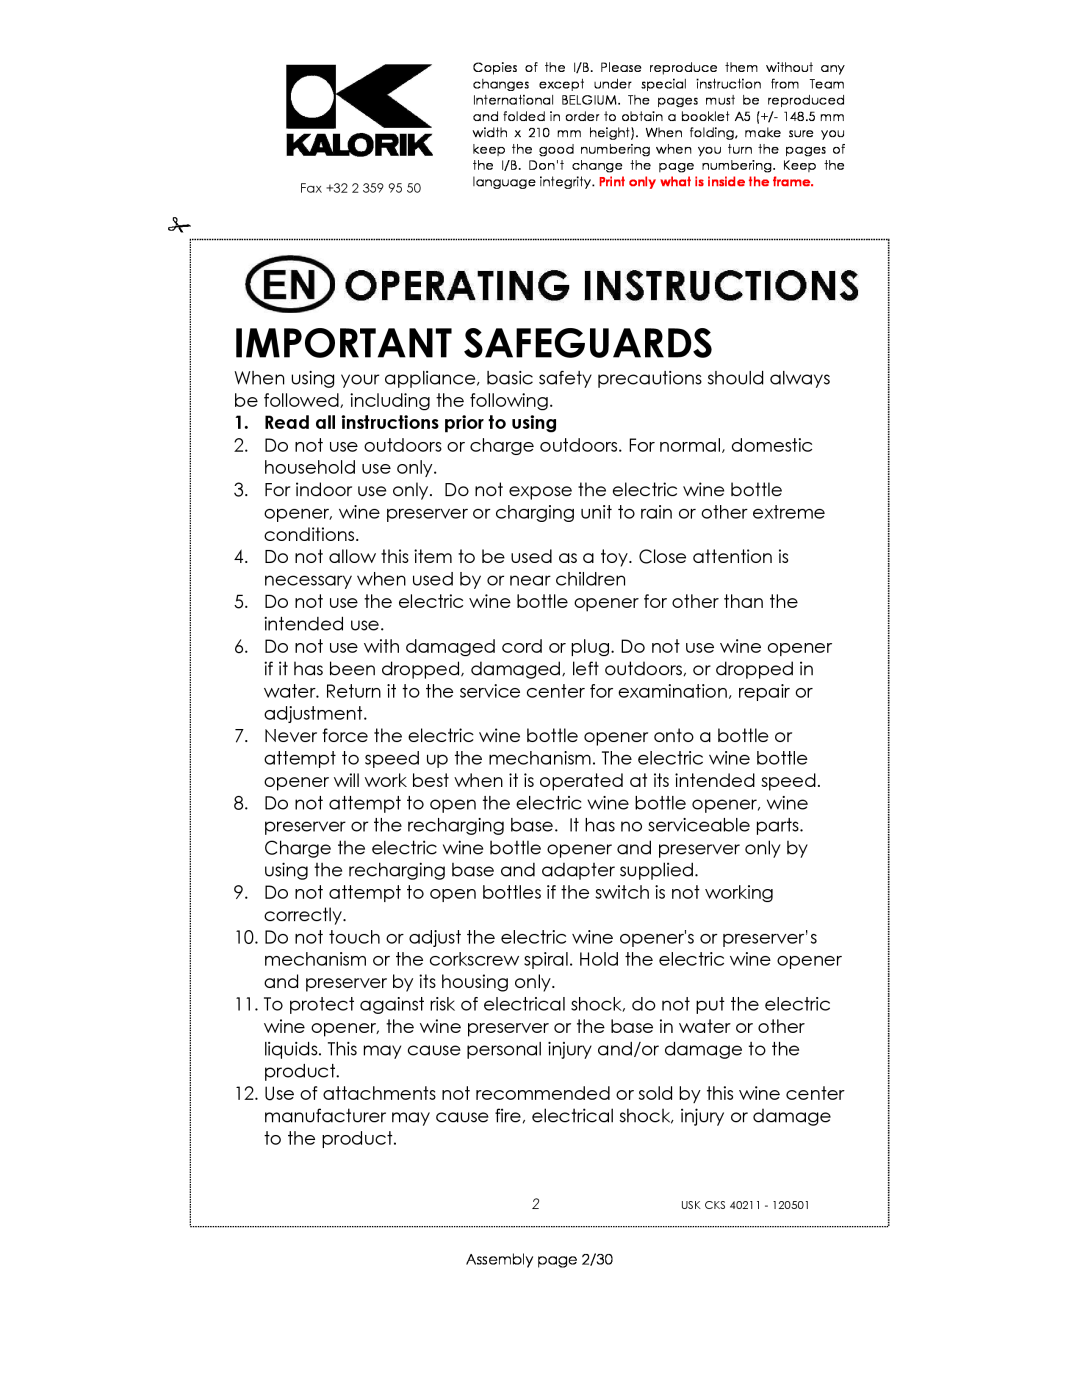 Kalorik CKS 40211 manual Important Safeguards, Read all instructions prior to using 